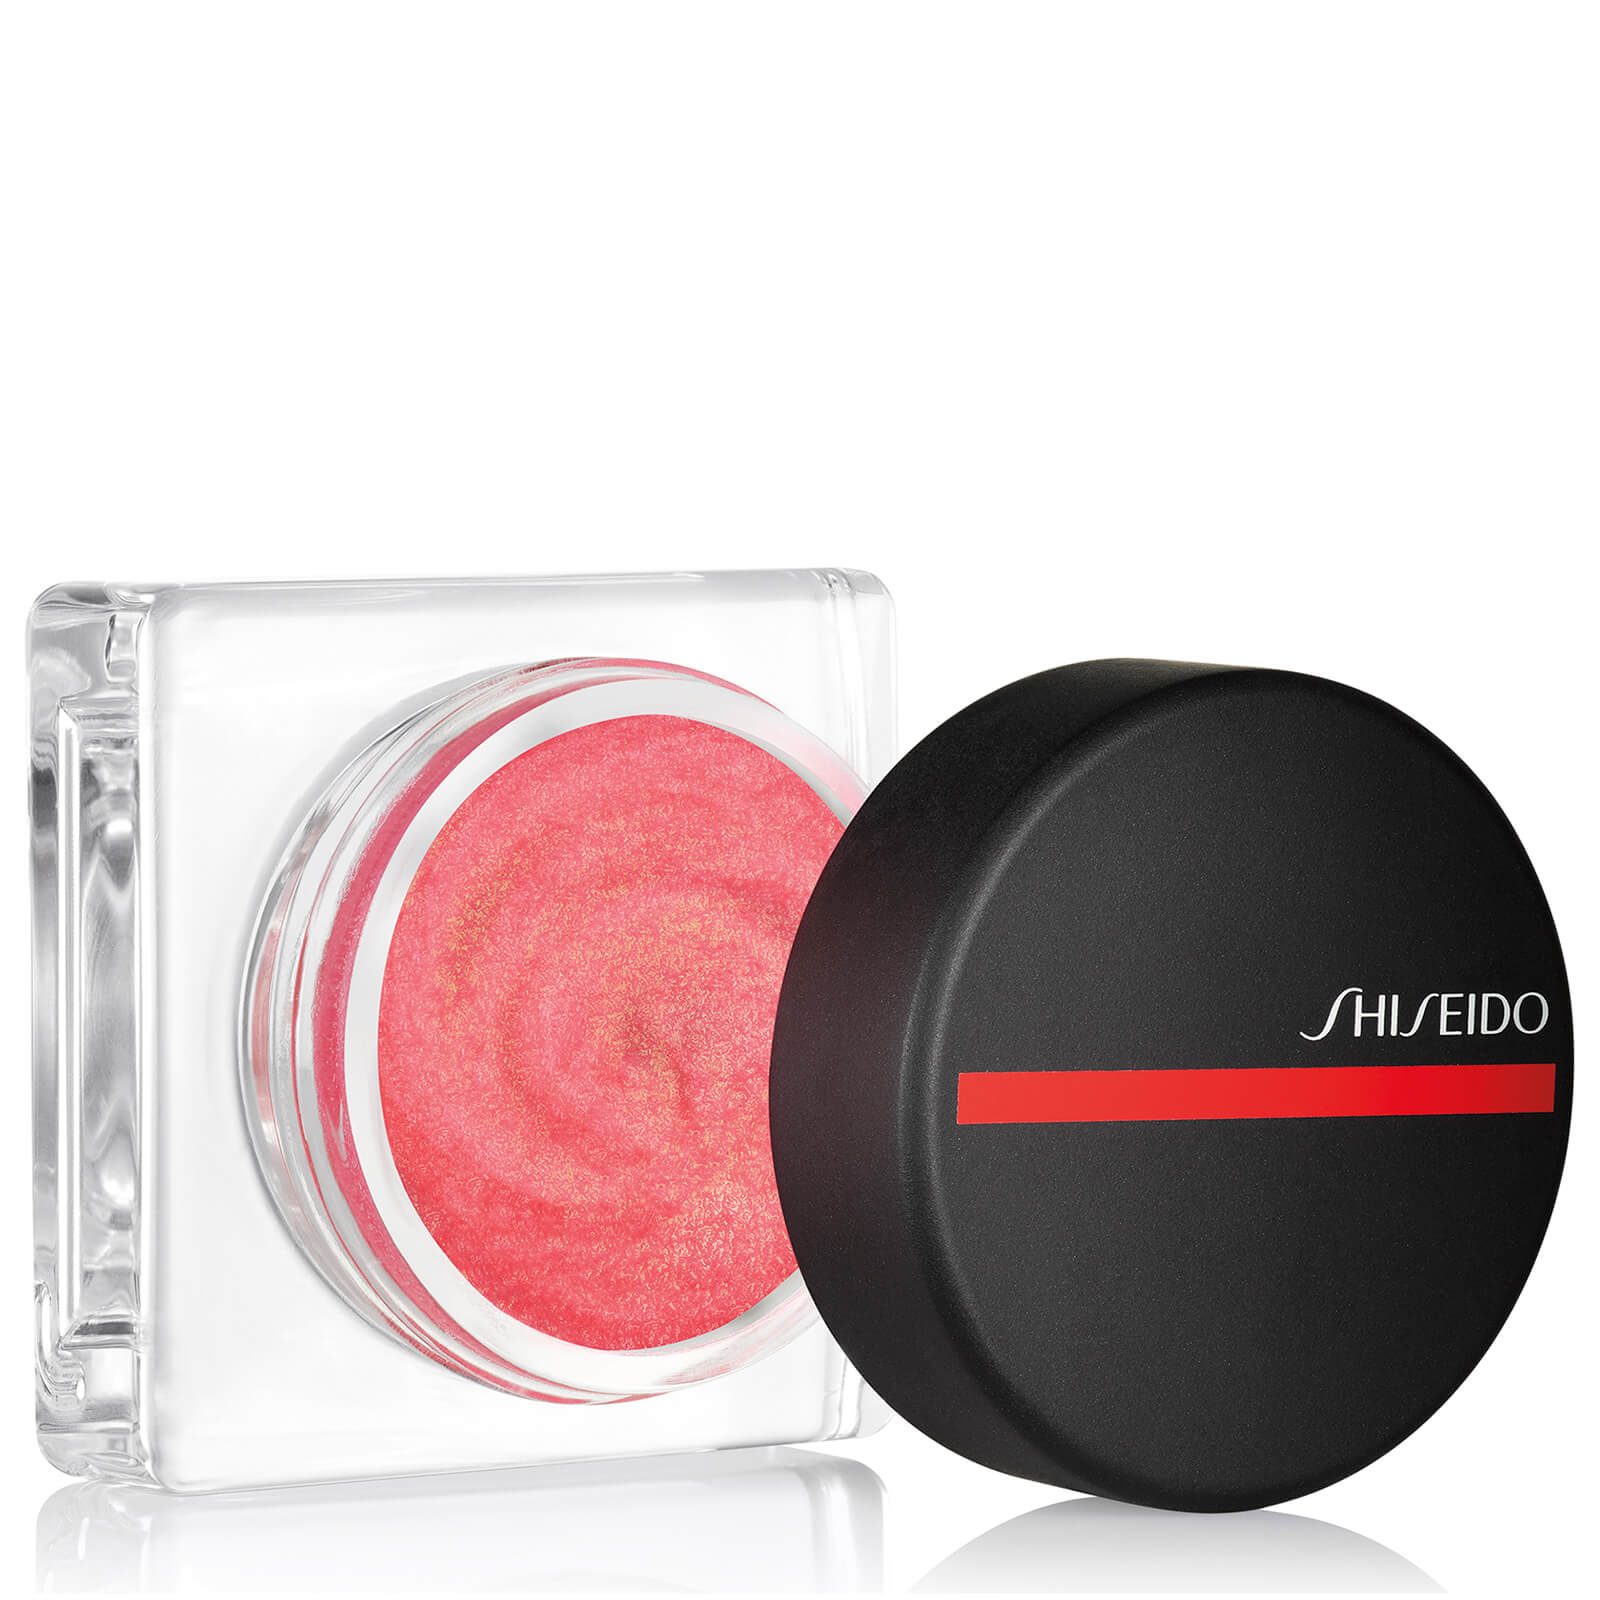 Shiseido Minimalist Whipped Powder Blush (Various Shades) - Blush Sonoya 01